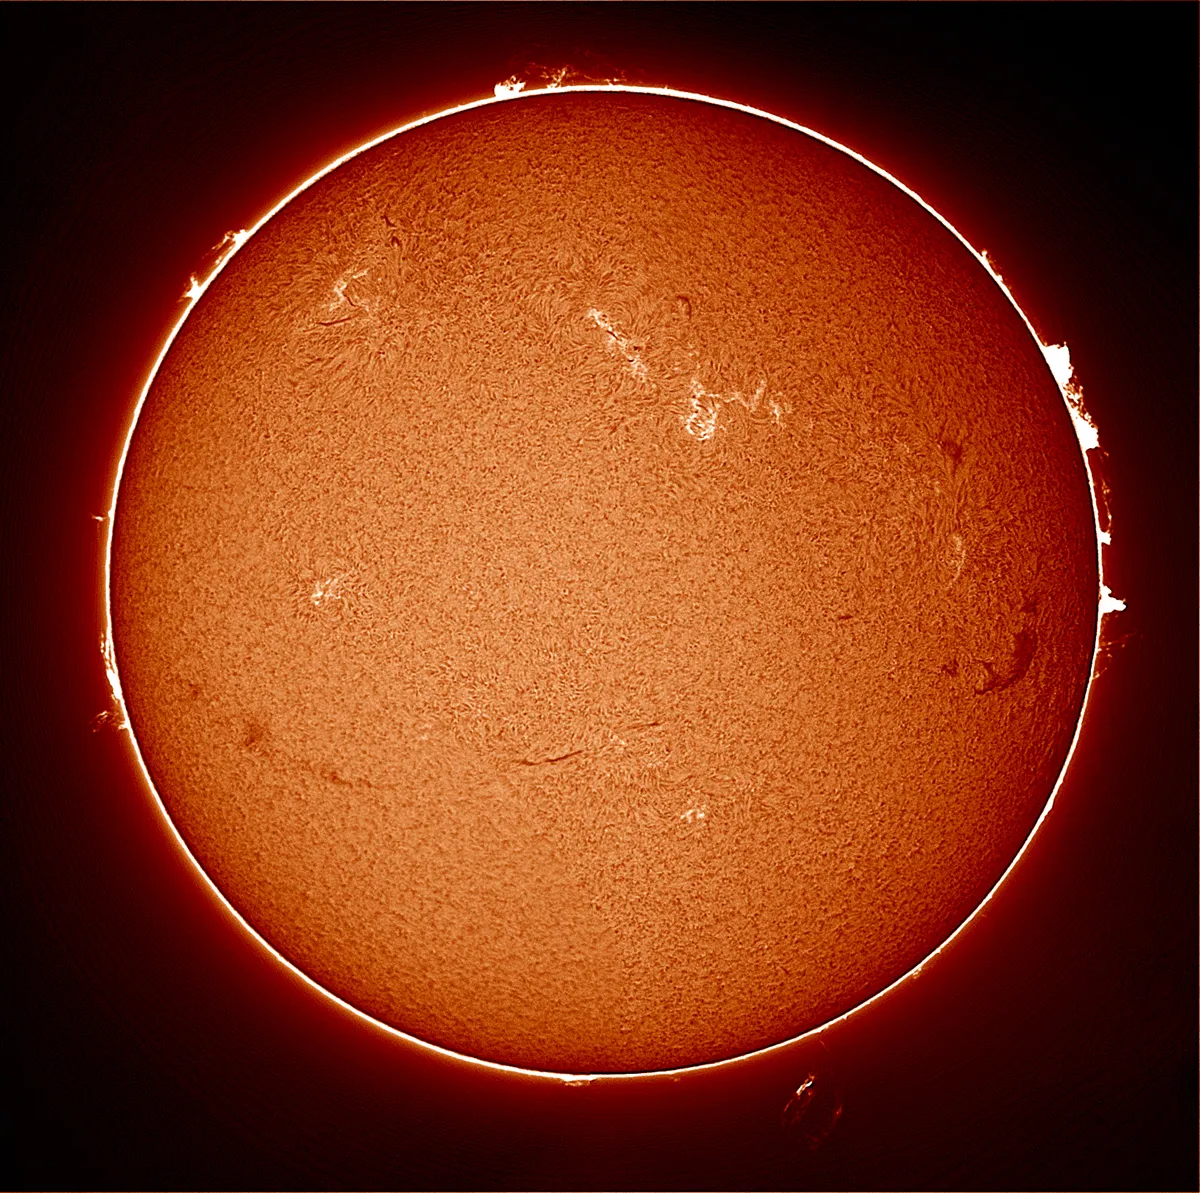 Huge solar flare captured on skywatcher's camera